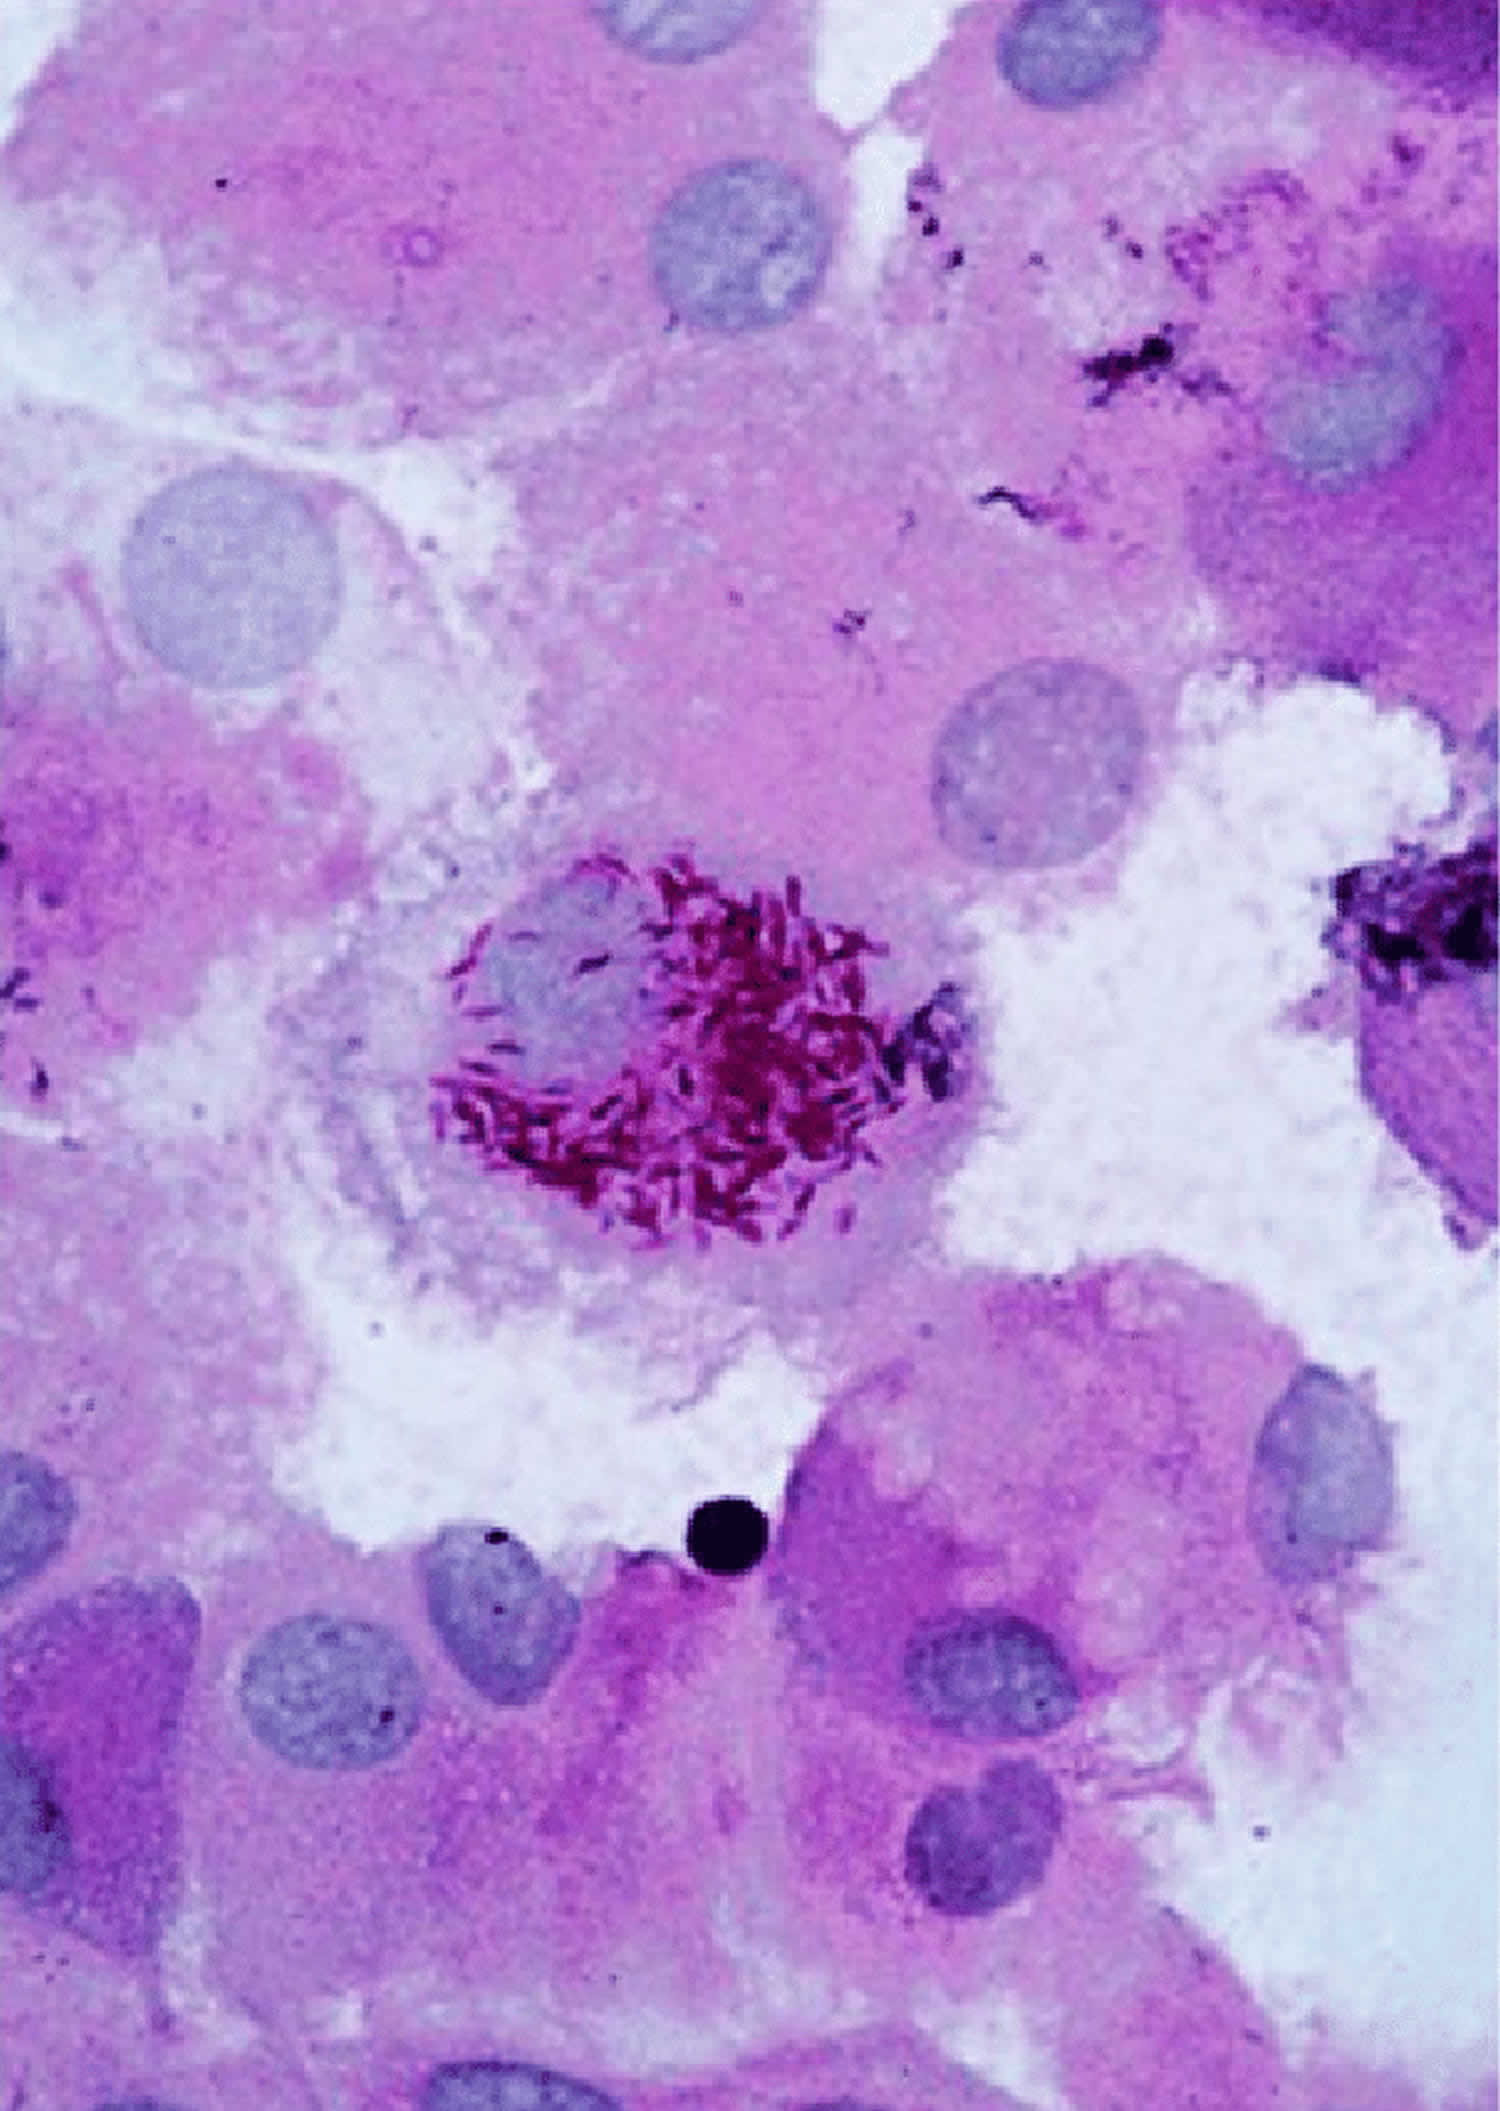 Tropheryma whipplei bacteria in human macrophages